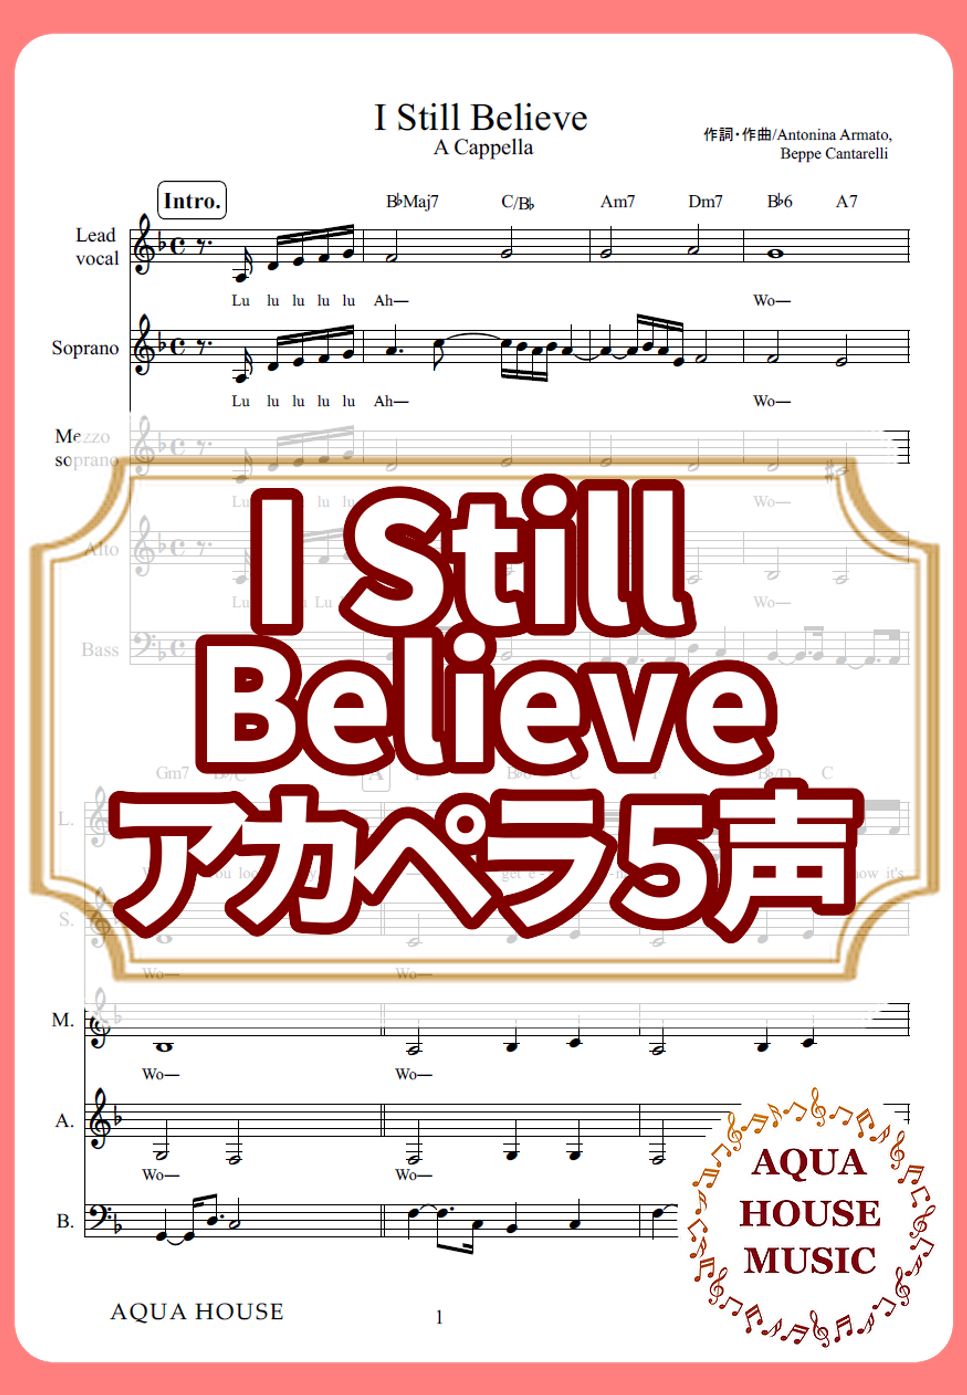 Brenda K Starr,Mariah Carey - I Still Believe (アカペラ楽譜♪5声ボイパなし) by 飯田 亜紗子